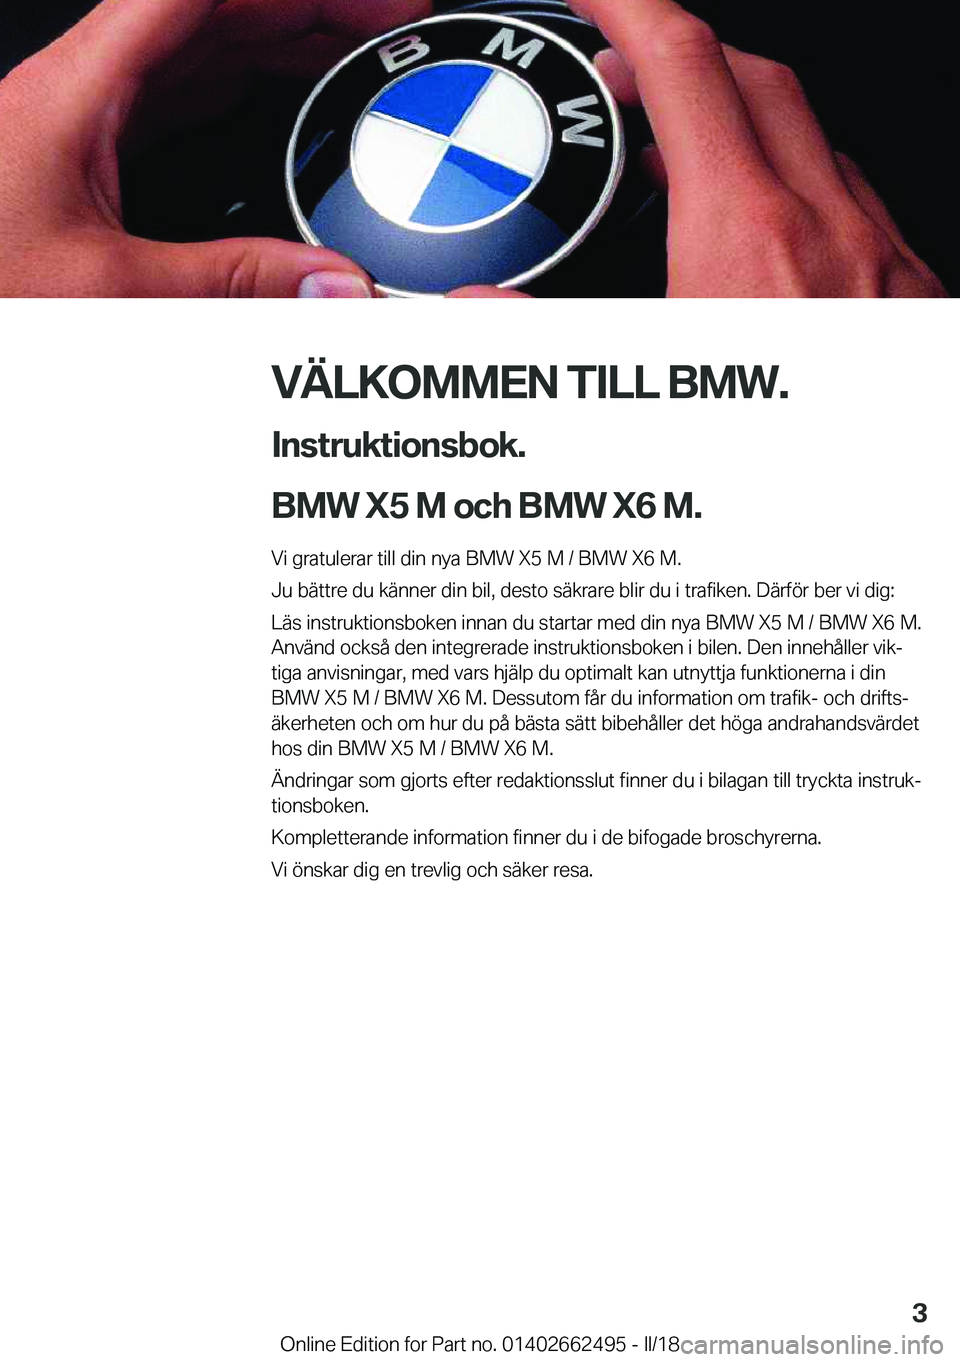 BMW X5 M 2018  InstruktionsbÖcker (in Swedish) �V�Ä�L�K�O�M�M�E�N��T�I�L�L��B�M�W�.�I�n�s�t�r�u�k�t�i�o�n�s�b�o�k�.
�B�M�W��X�5��M��o�c�h��B�M�W��X�6��M�.
�V�i� �g�r�a�t�u�l�e�r�a�r� �t�i�l�l� �d�i�n� �n�y�a� �B�M�W� �X�5� �M� �/� �B�M�W�